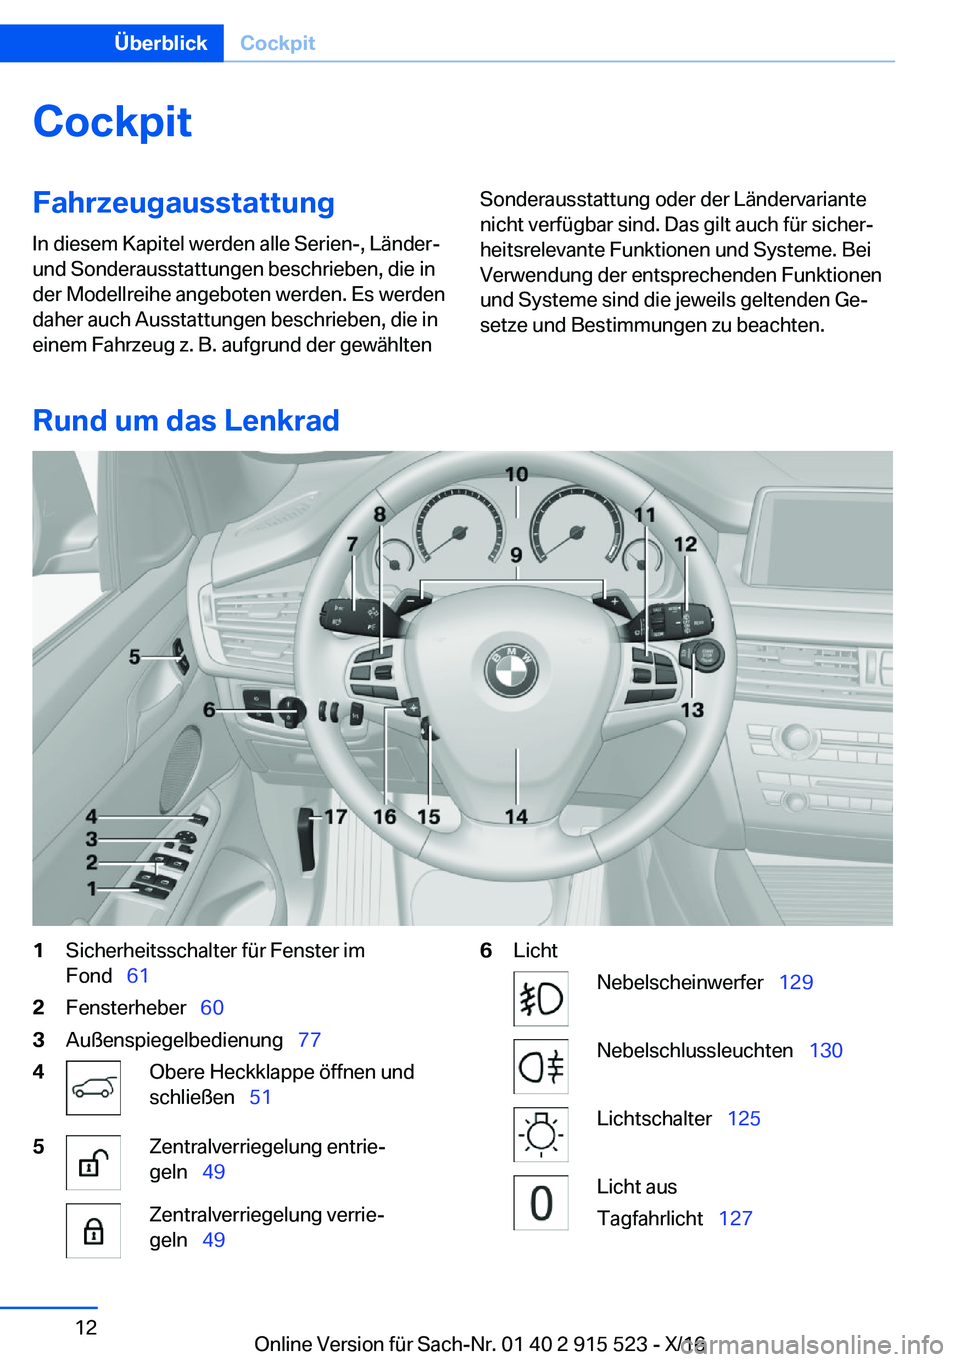 BMW X5 2017  Betriebsanleitungen (in German) �C�o�c�k�p�i�t�F�a�h�r�z�e�u�g�a�u�s�s�t�a�t�t�u�n�g
�I�n� �d�i�e�s�e�m� �K�a�p�i�t�e�l� �w�e�r�d�e�n� �a�l�l�e� �S�e�r�i�e�n�-�,� �L�ä�n�d�e�r�- �u�n�d� �S�o�n�d�e�r�a�u�s�s�t�a�t�t�u�n�g�e�n� �b�e�